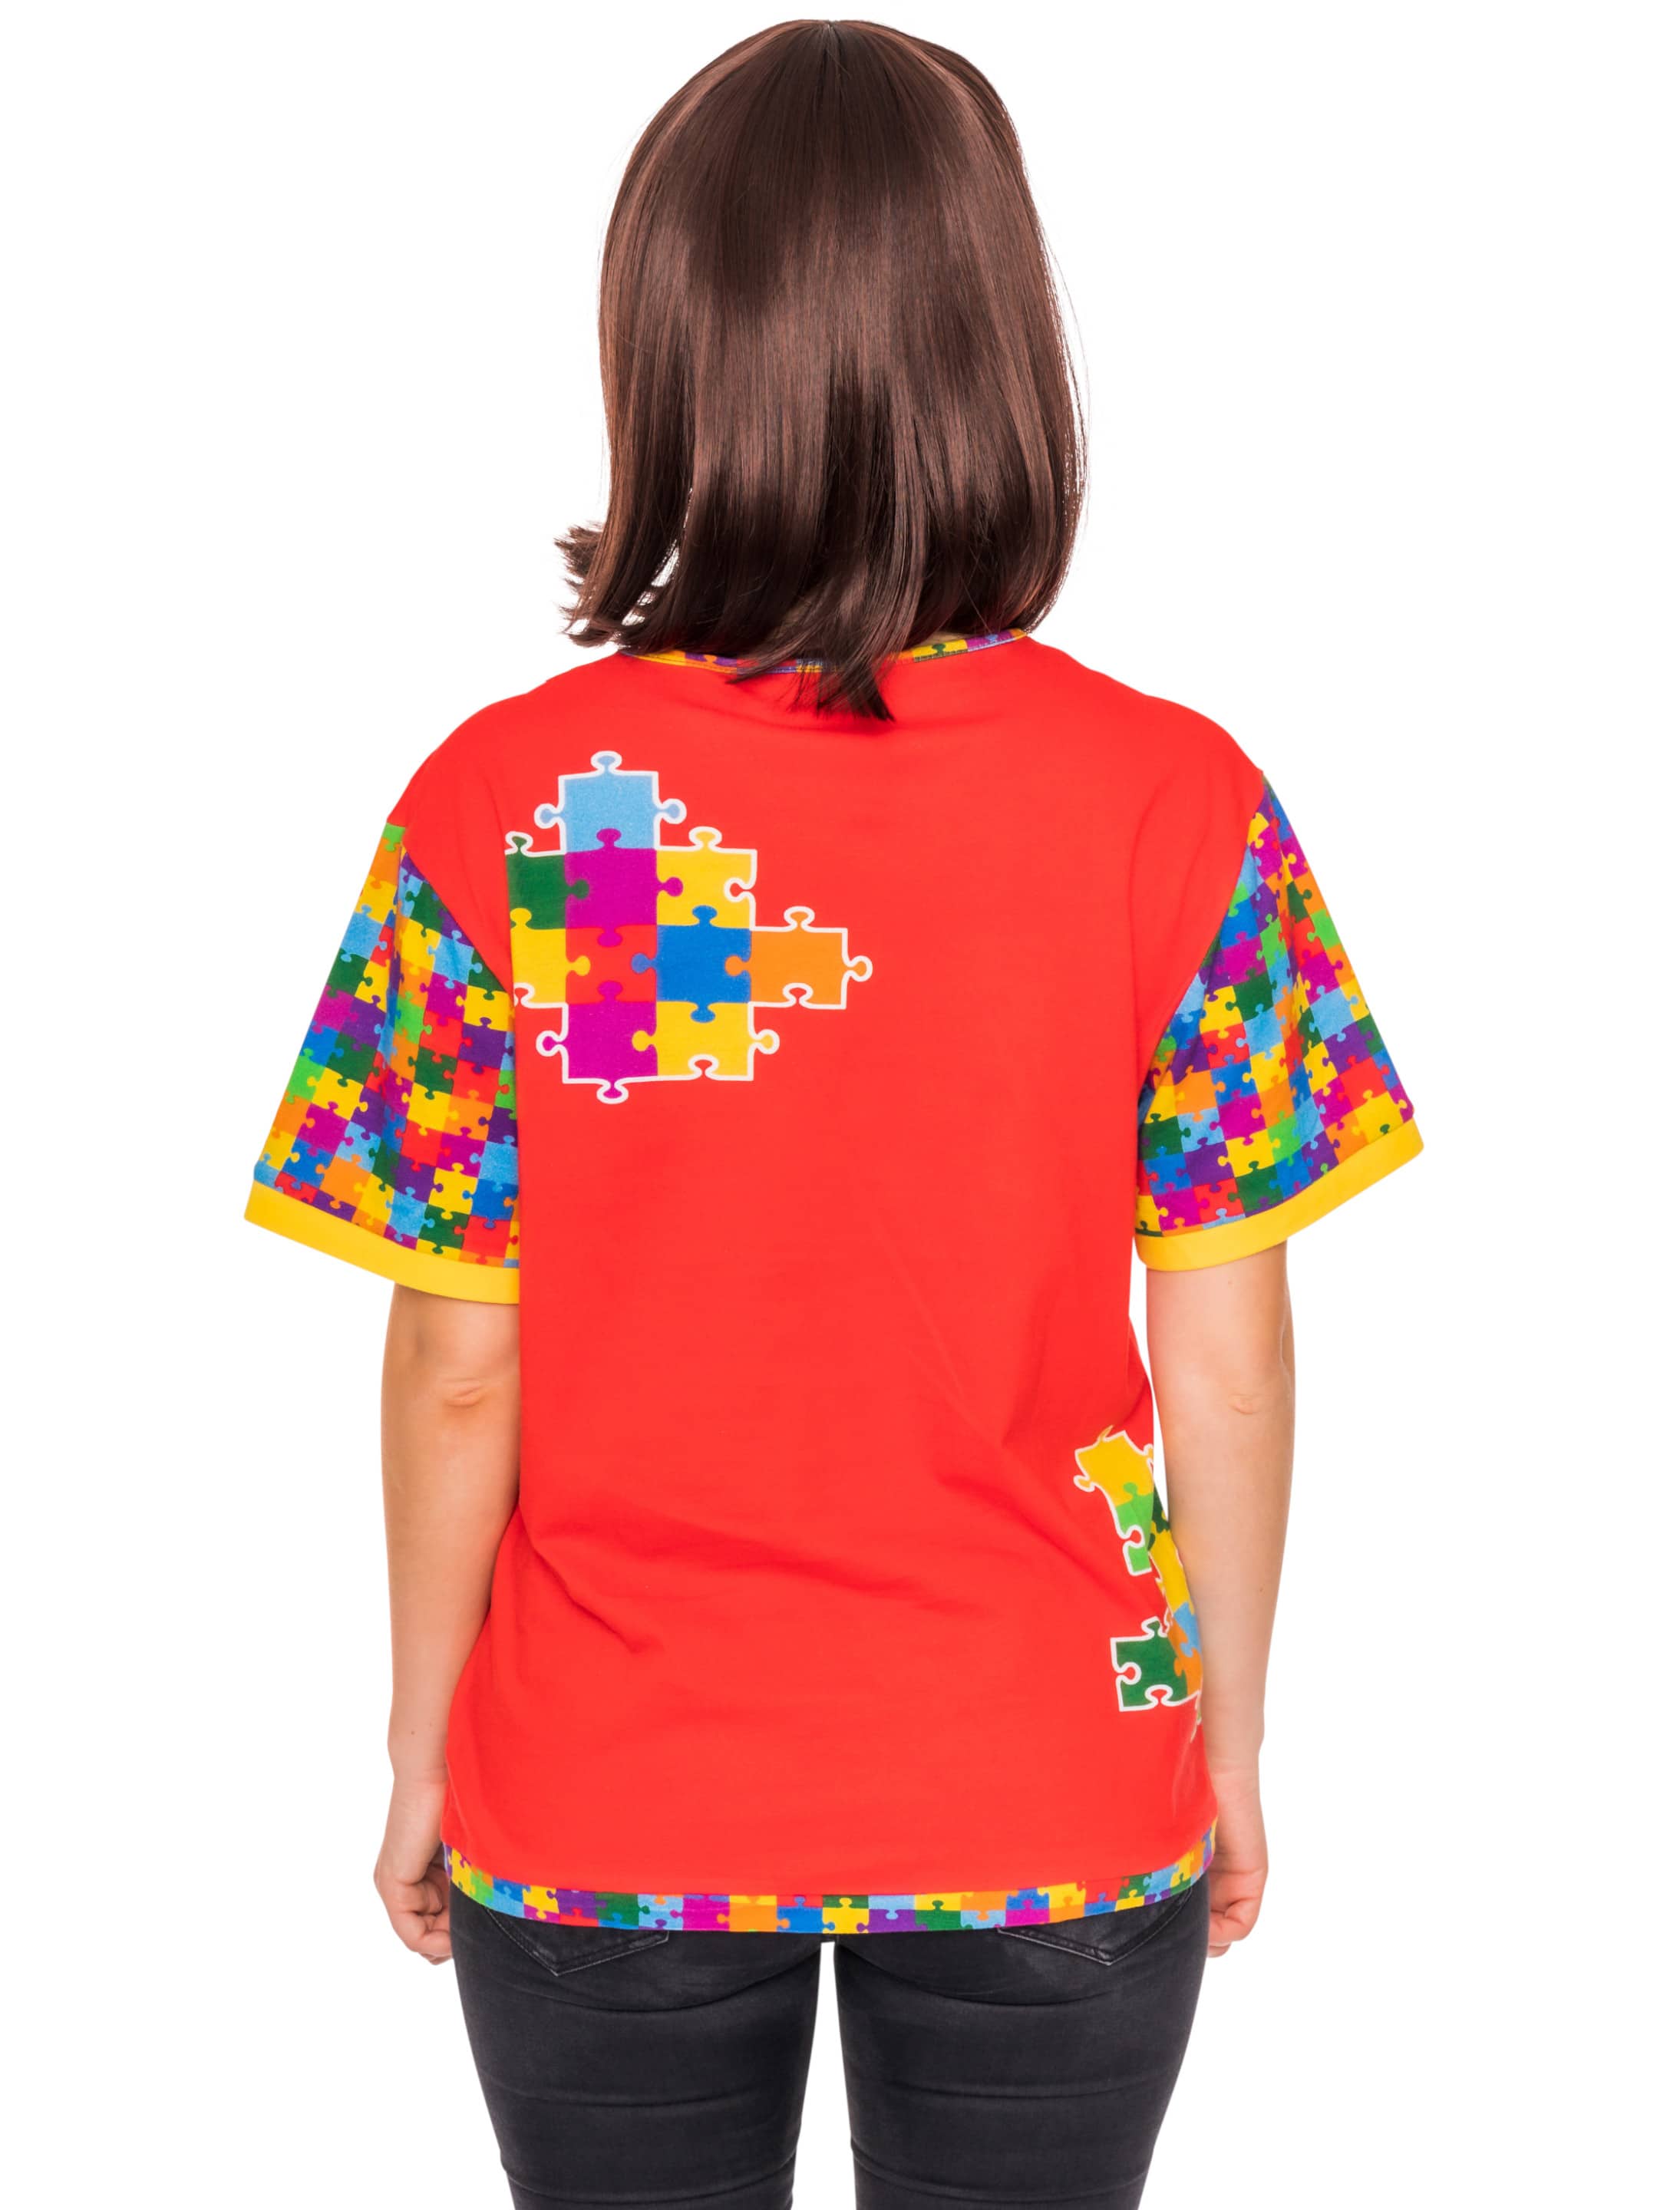 Motto T-Shirt 2020/2021 Unisex mehrfarbig M